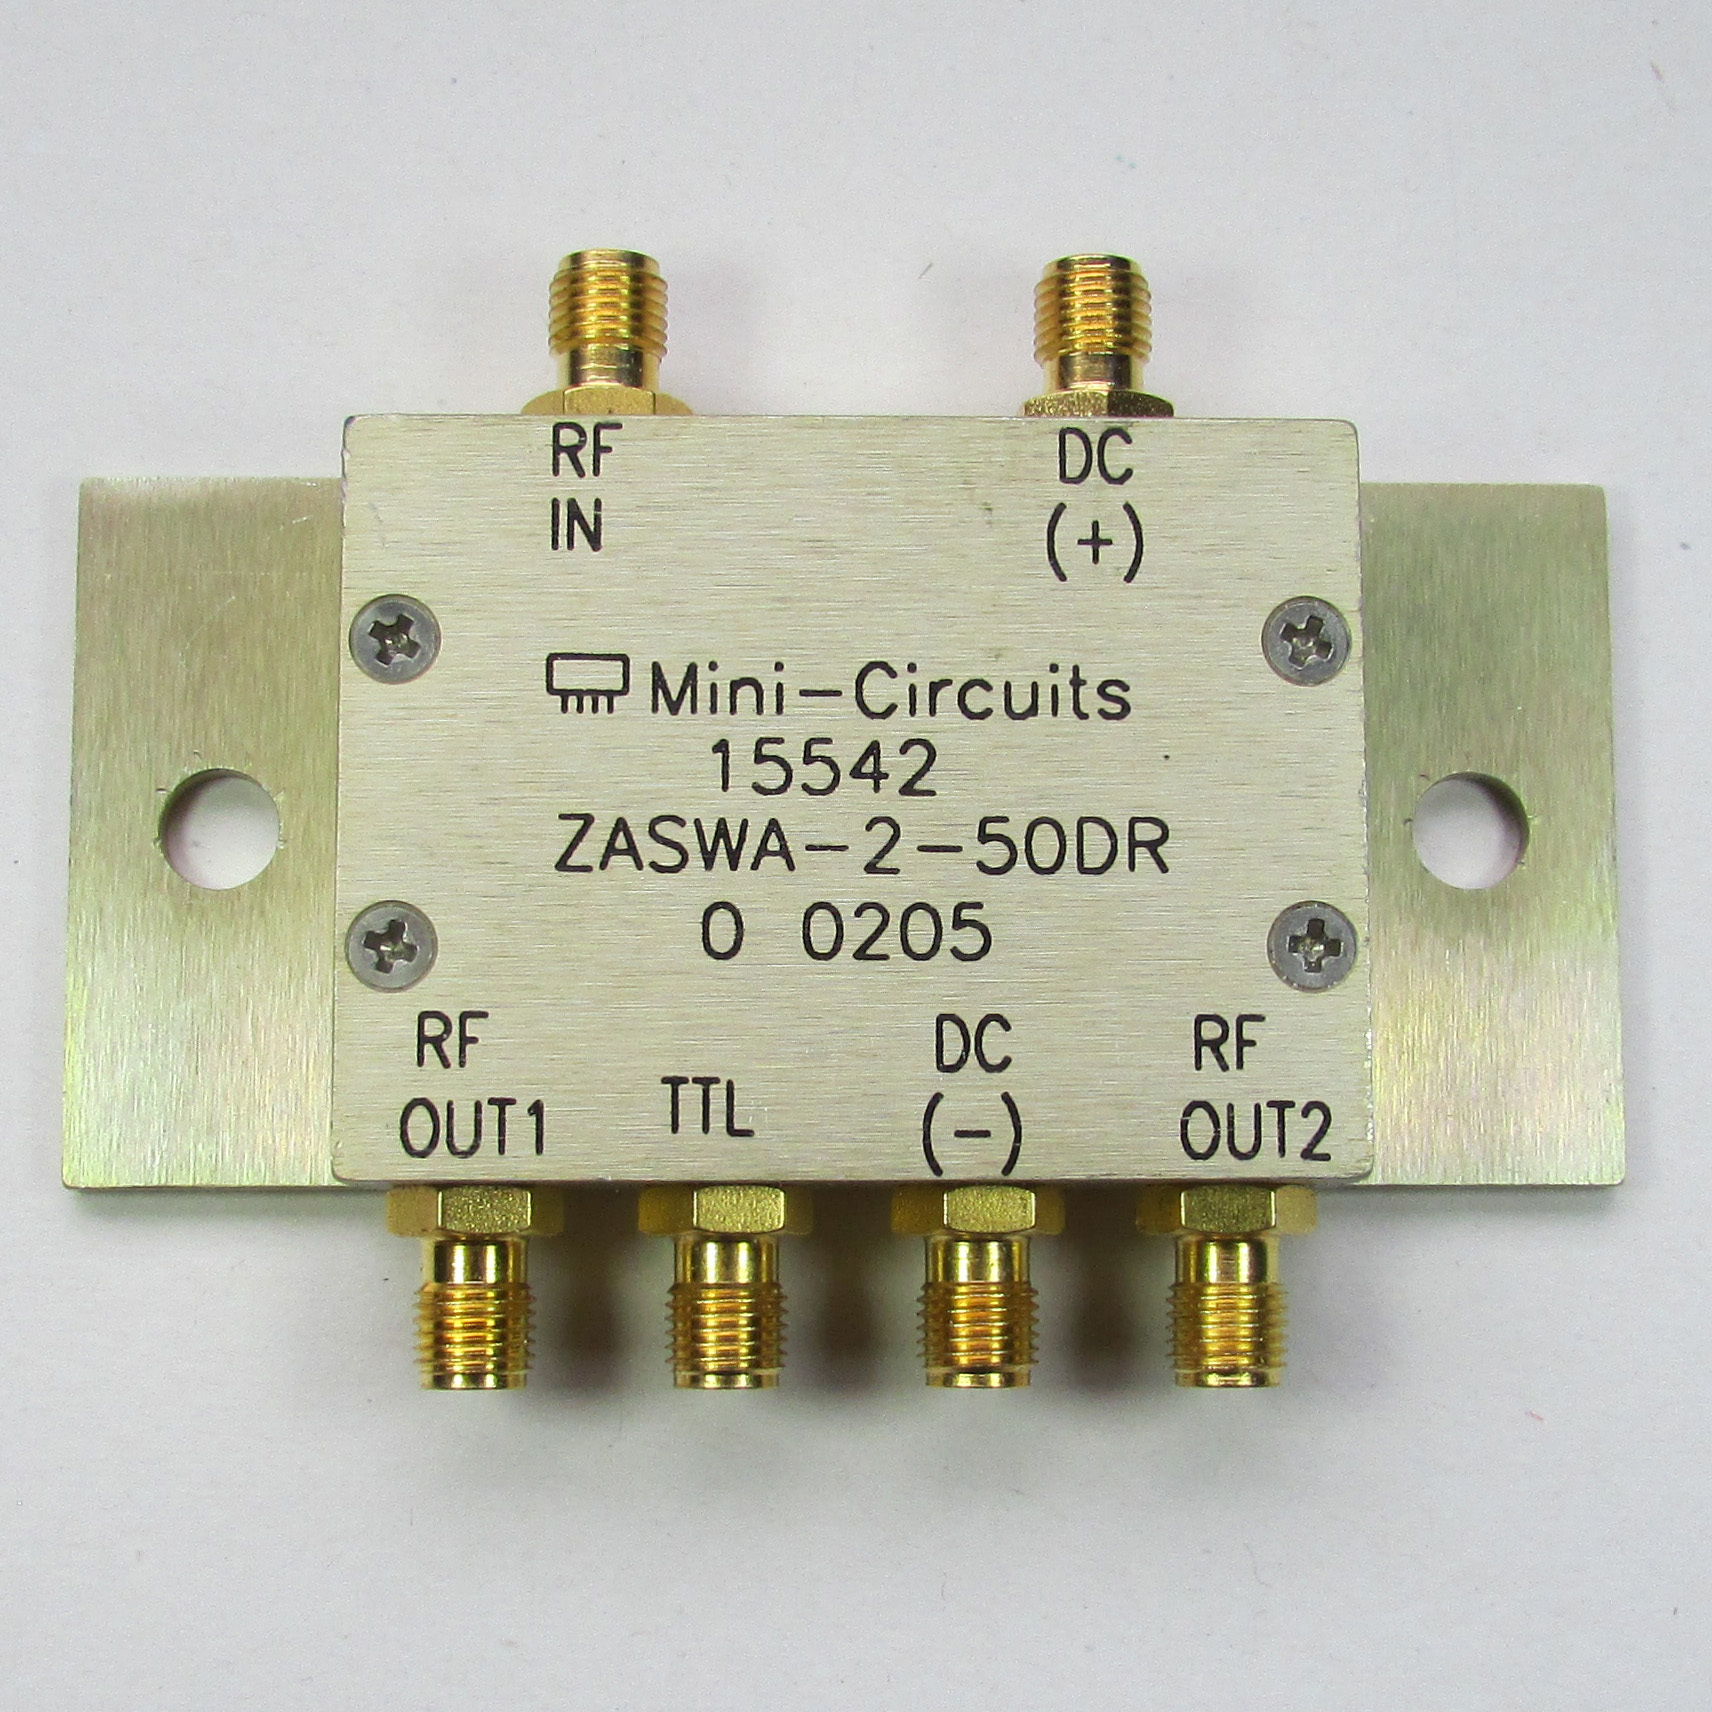 Mini-Circuits ZASWA-2-50DR DC-5GHz SMA single-pole double-throw RF high-isolation switch